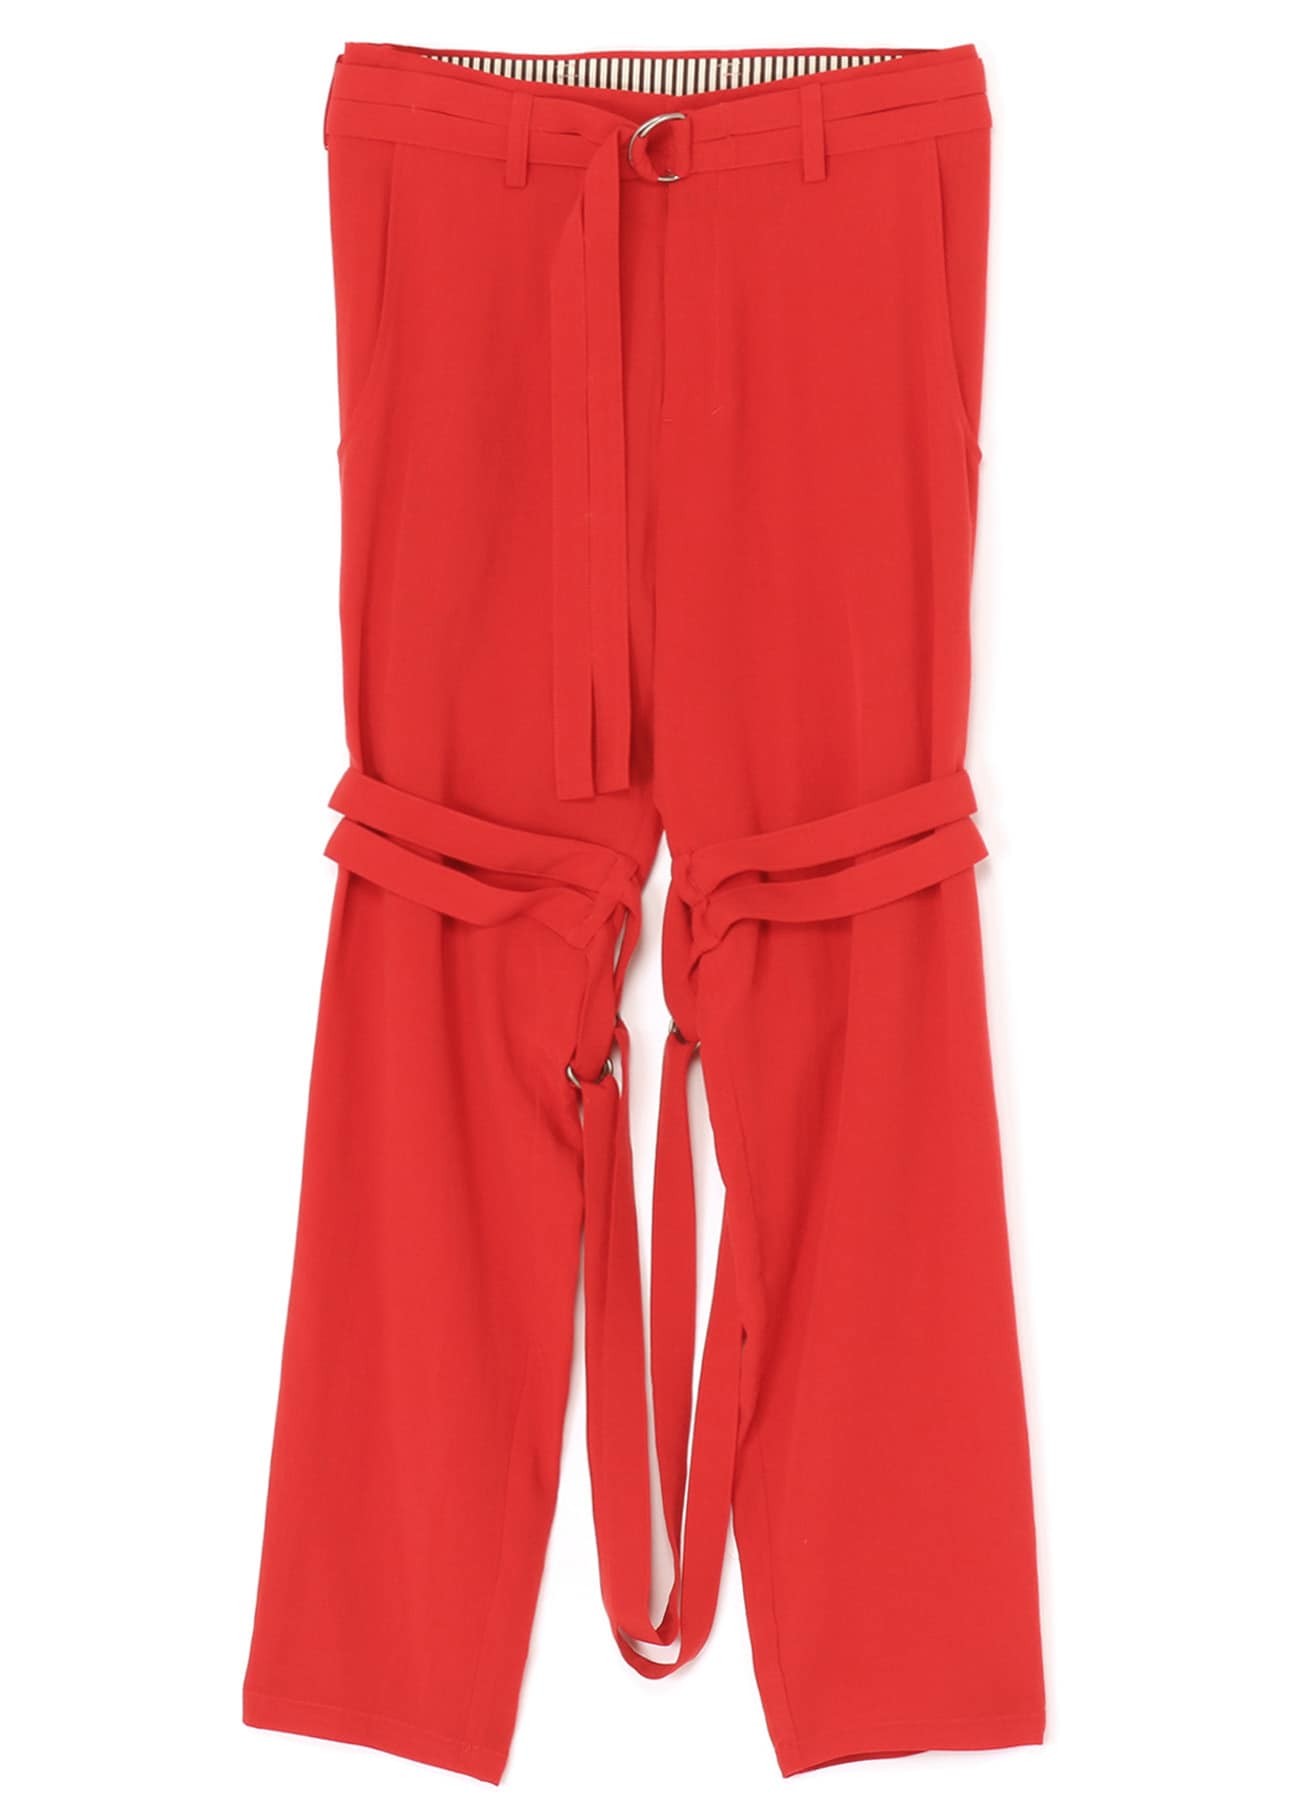 Generic Tie Dye Sweatpants Women Elastic High Waist Baggy Red_S